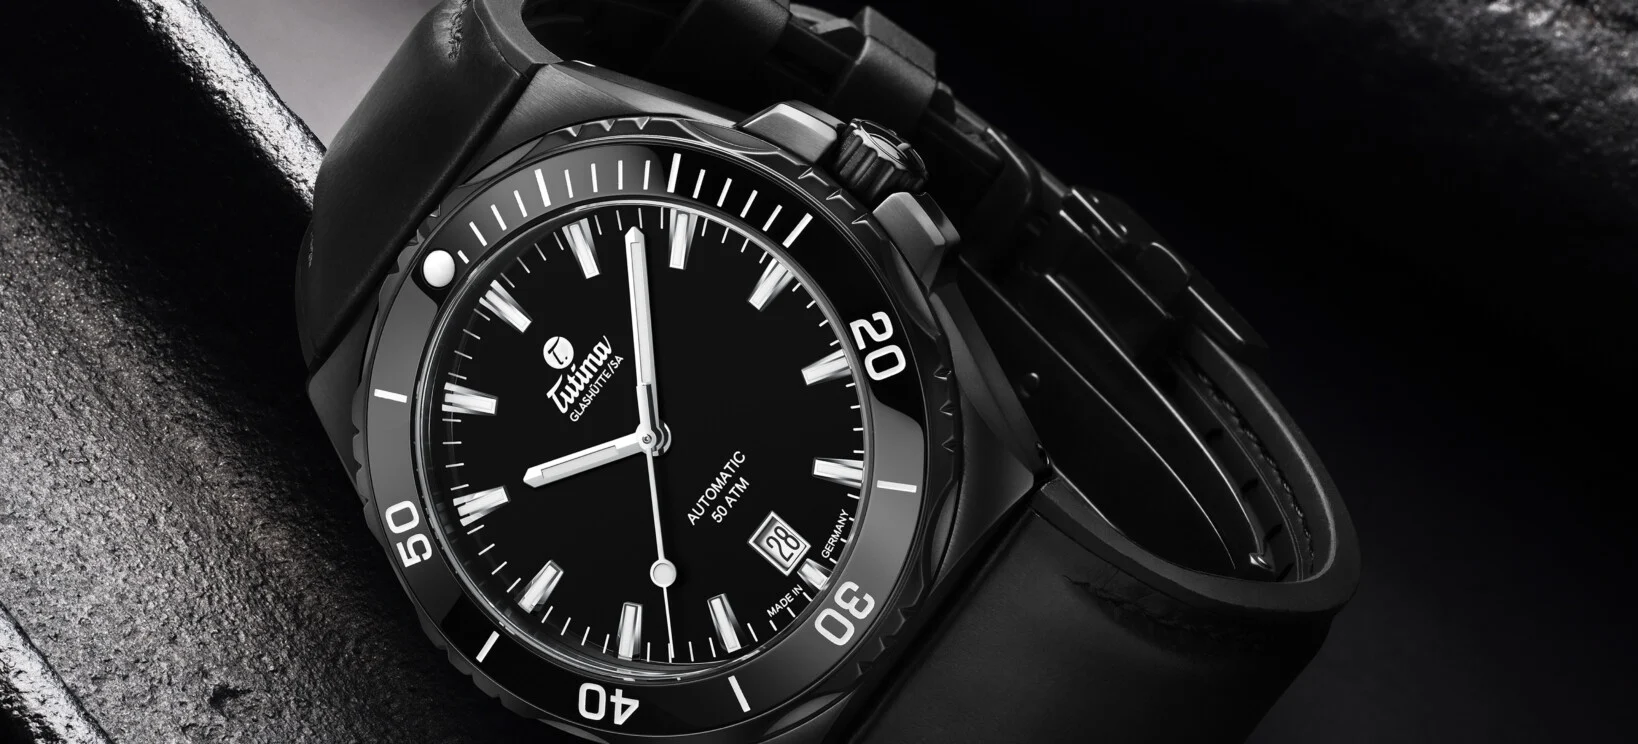 The new M2 Seven Seas S Black Limited Edition from Tutima Glashütte